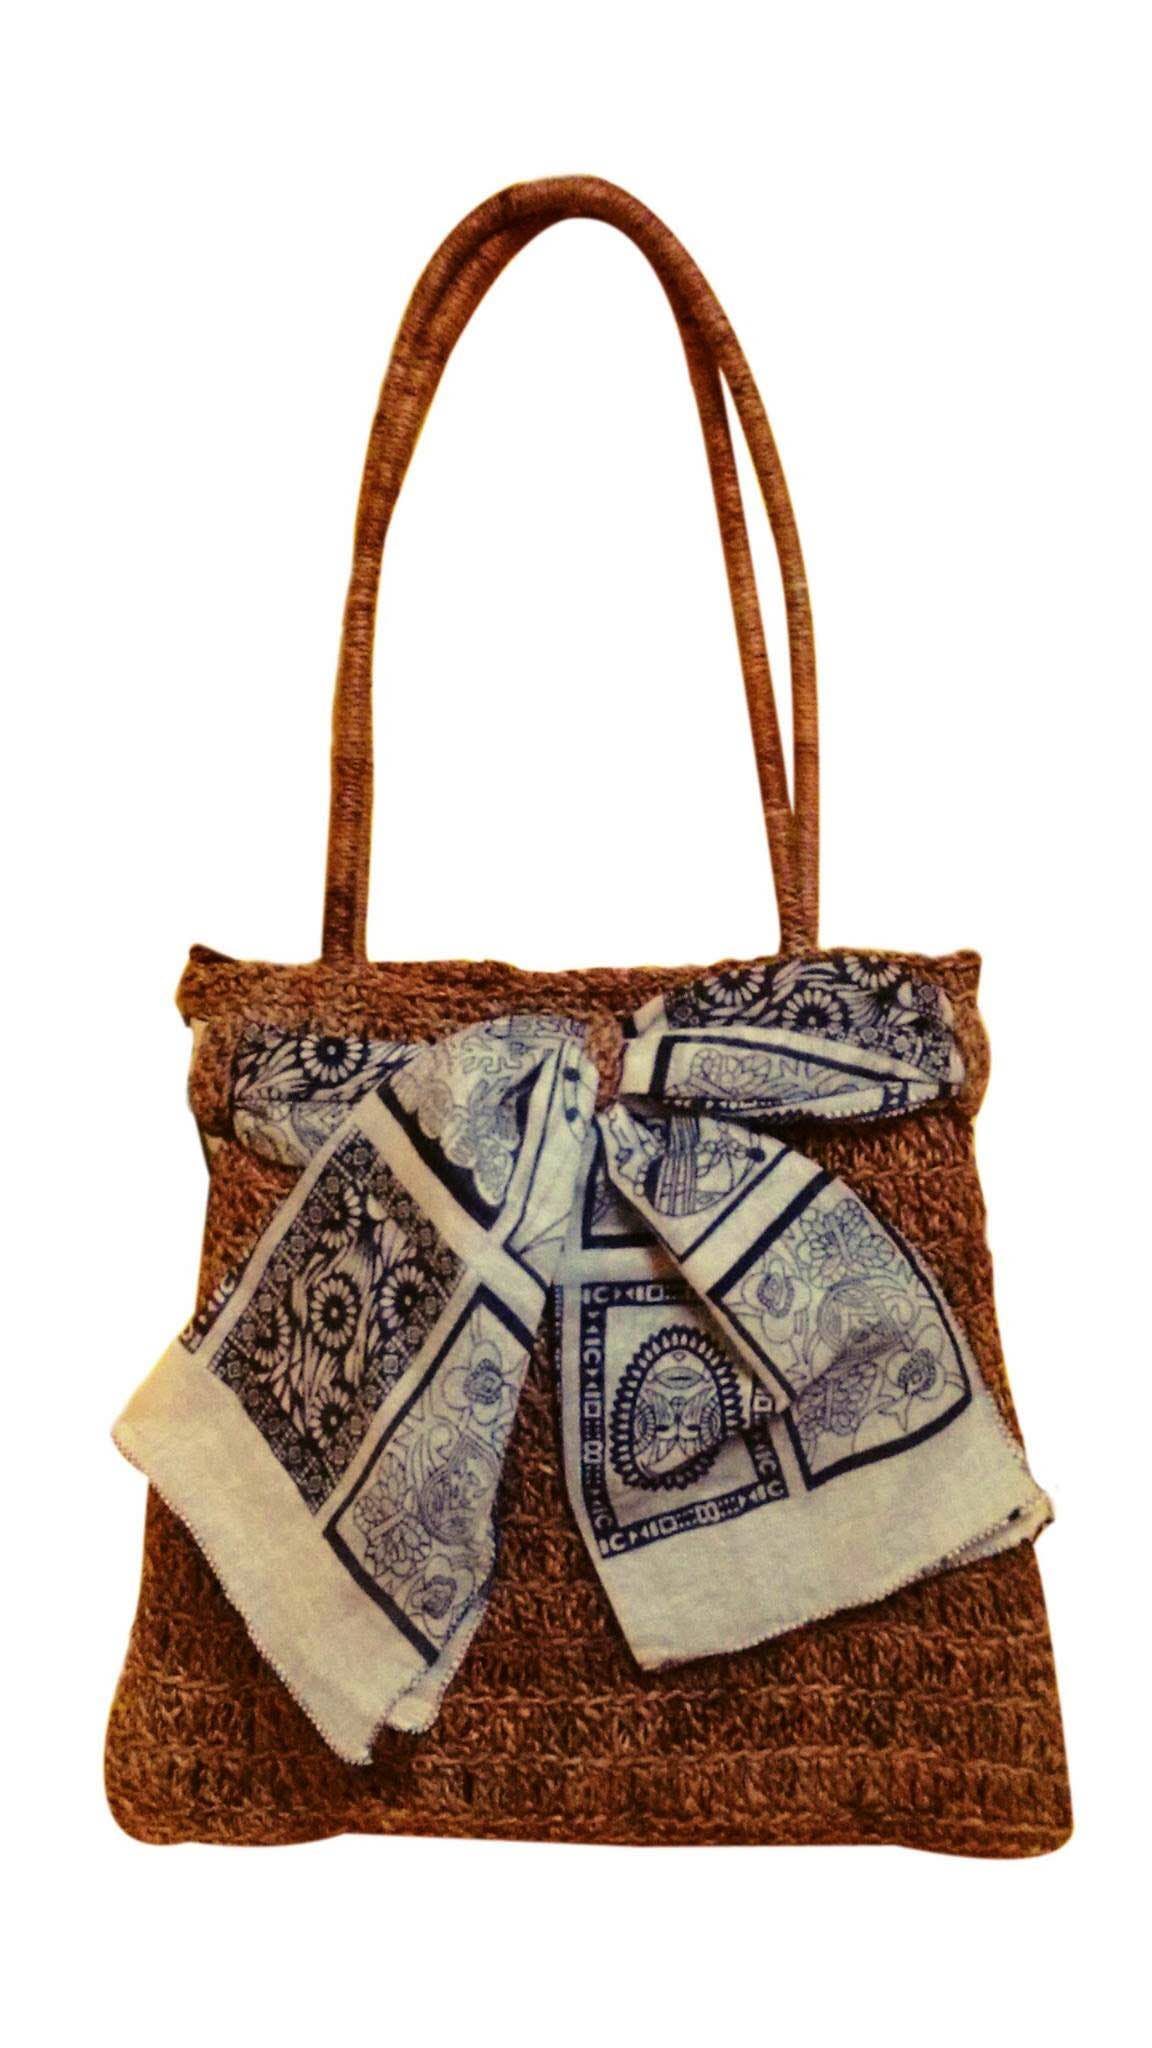 Handbag,Bag,Shoulder bag,Product,Brown,Fashion accessory,Tote bag,Beige,Luggage and bags,Diaper bag